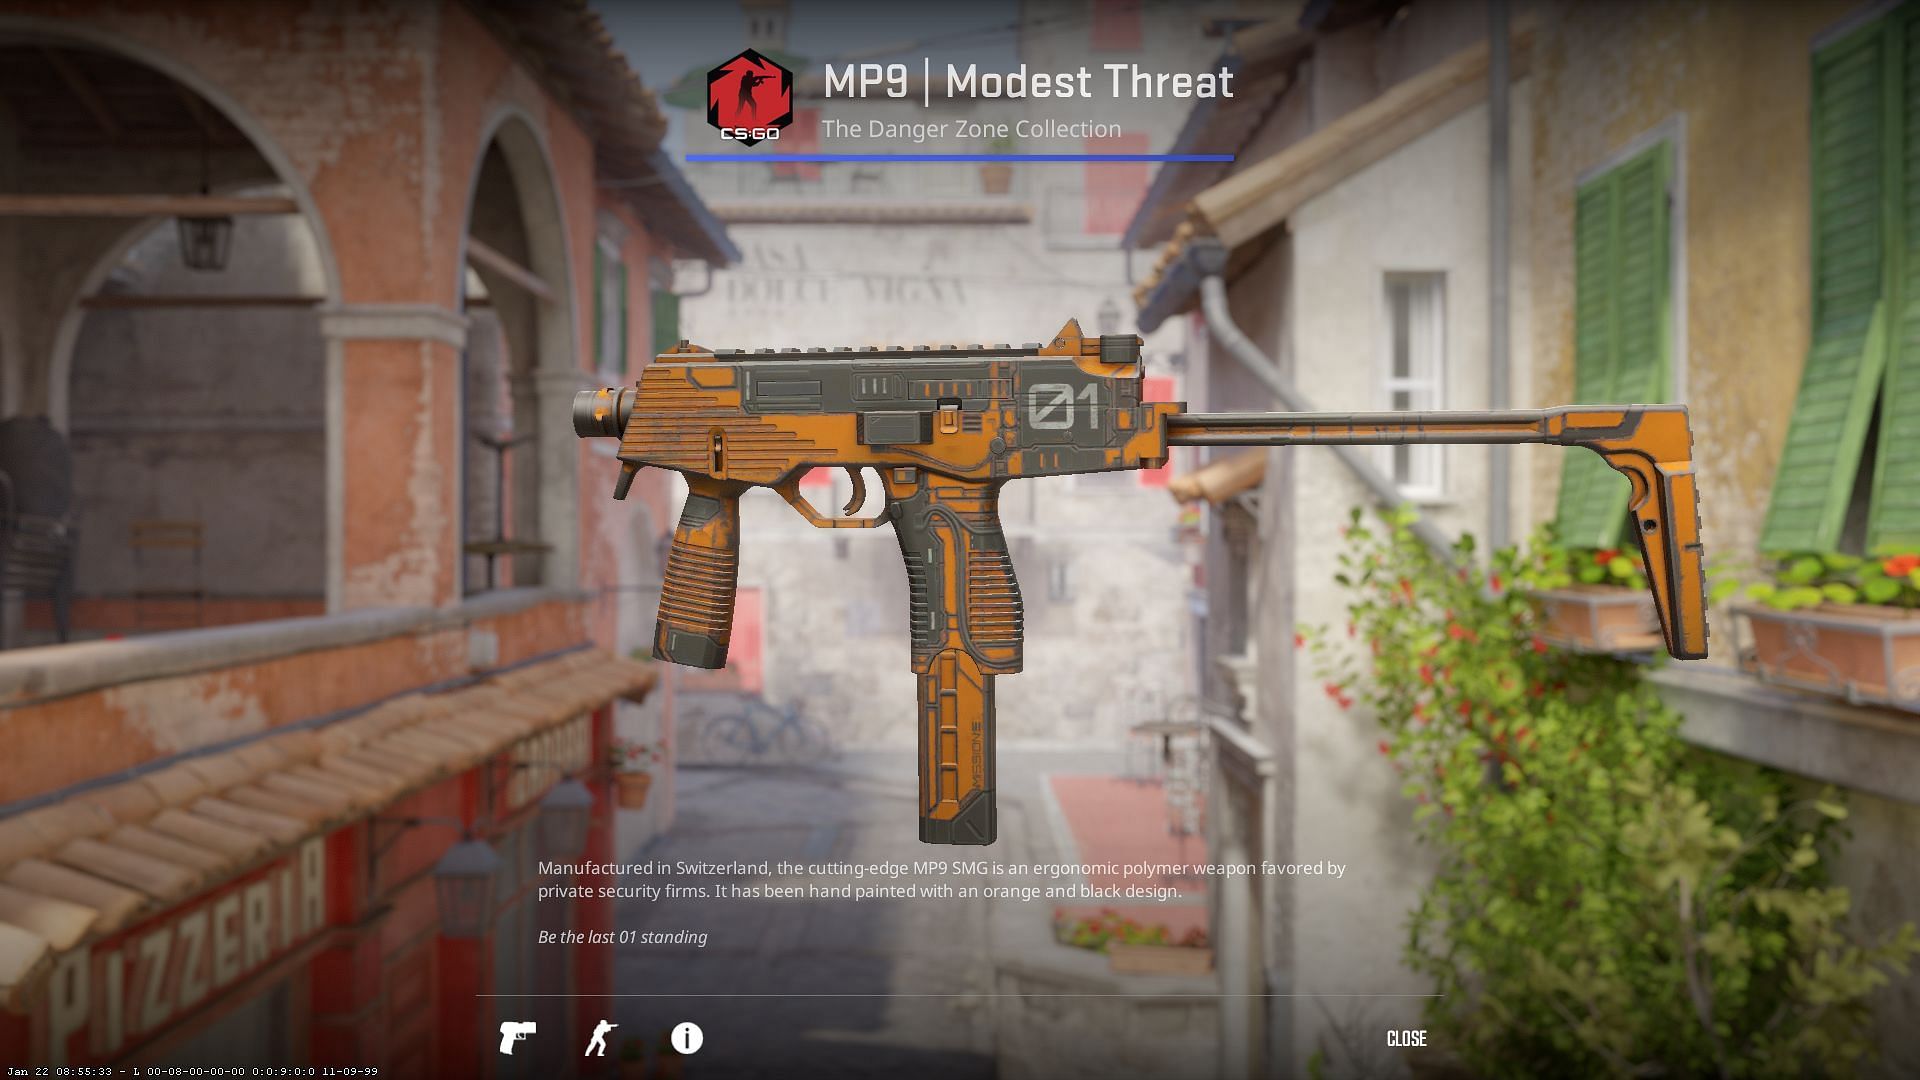 MP9 Modest Threat (Image via Valve)